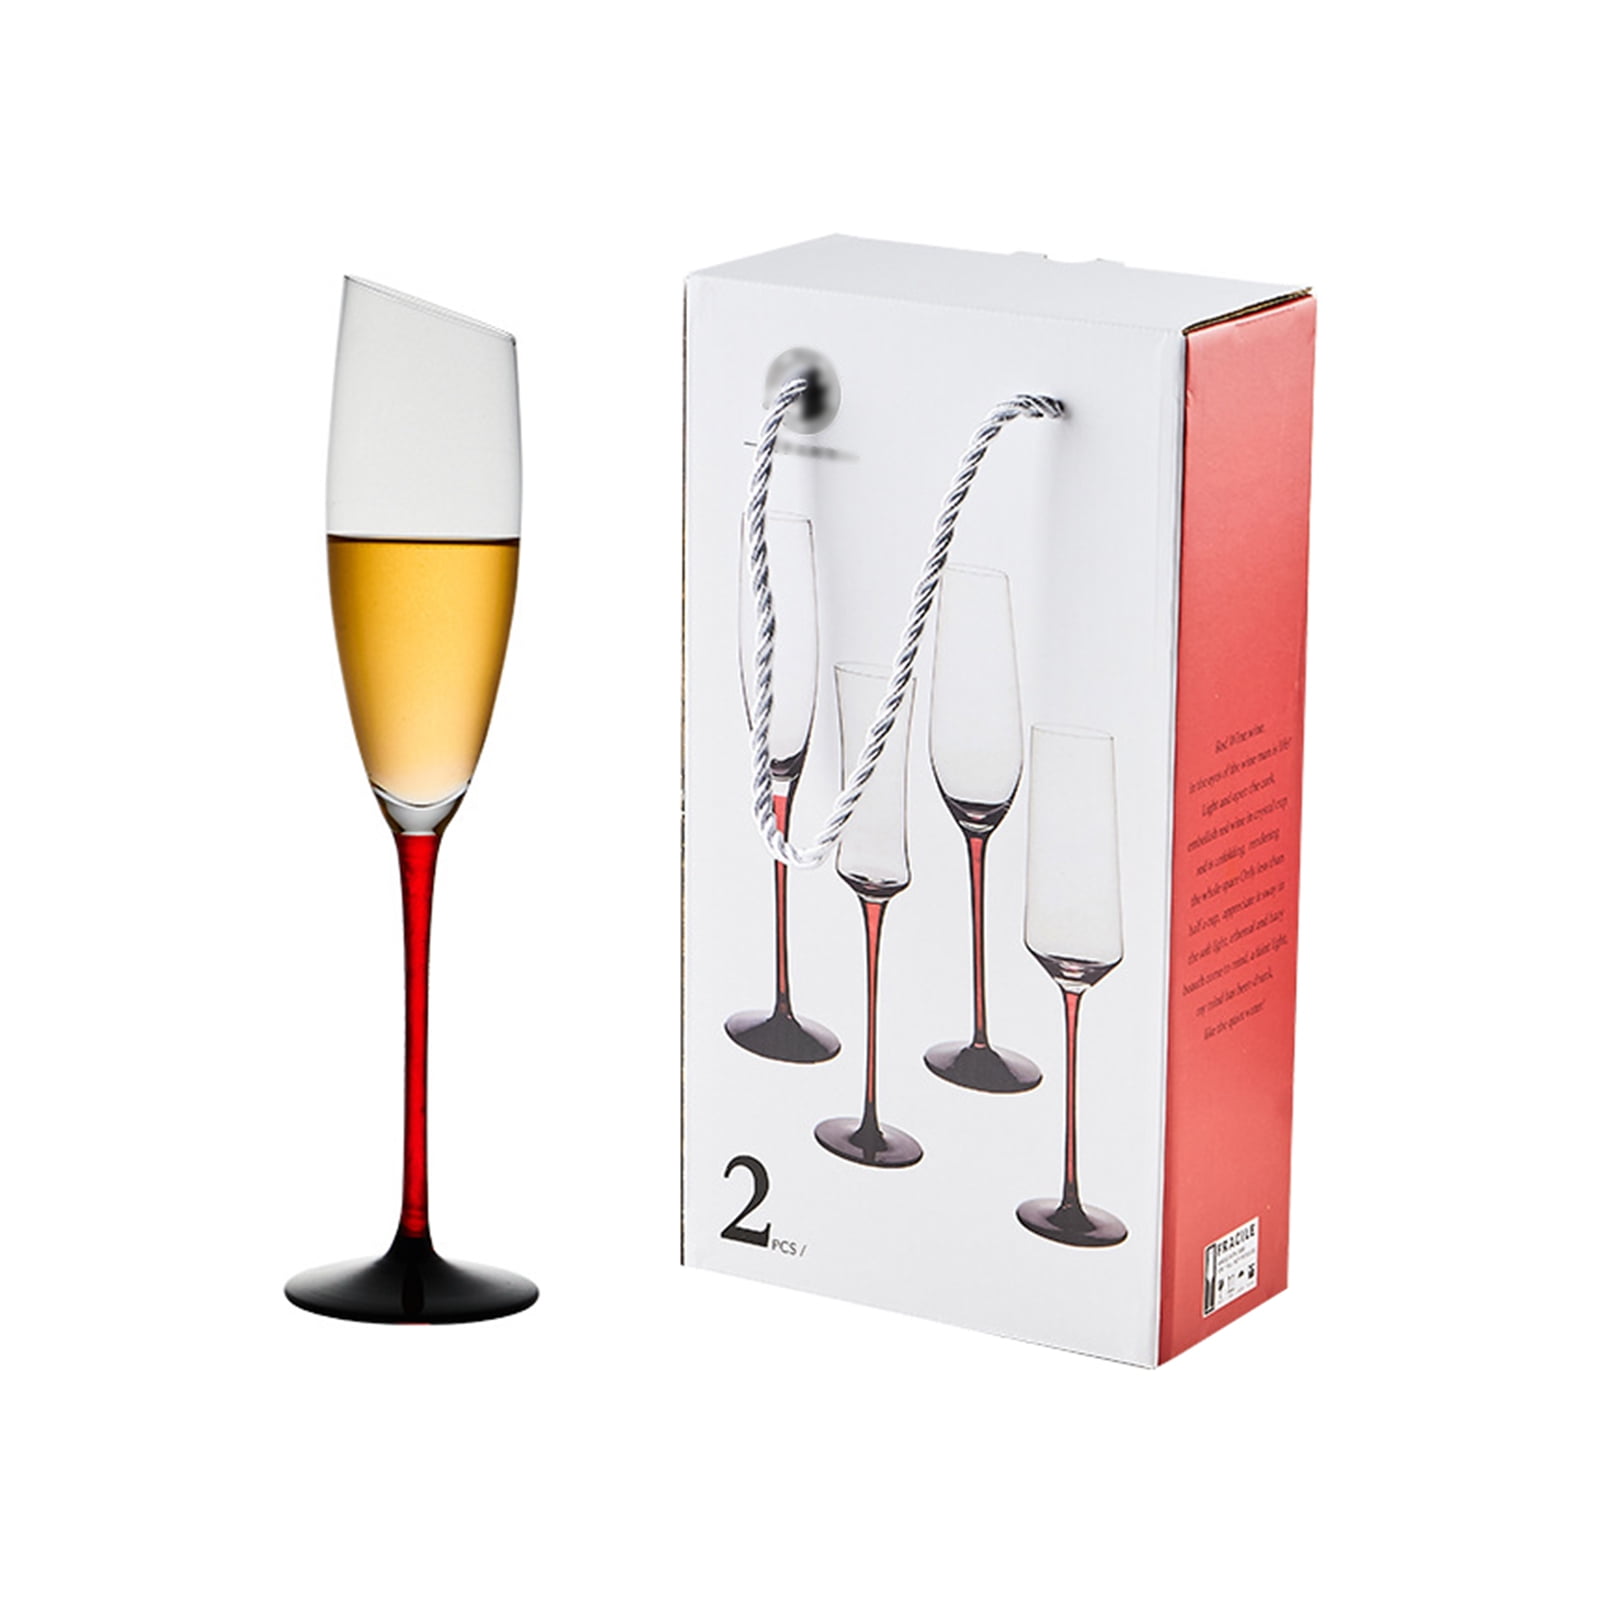 Champagne Flutes Glasses Set of 2,Non- Crystal Glasses, Unique Spiral Design Stem Sparkling Stemware, Gift for Wedding Anniversary Birthday Golden